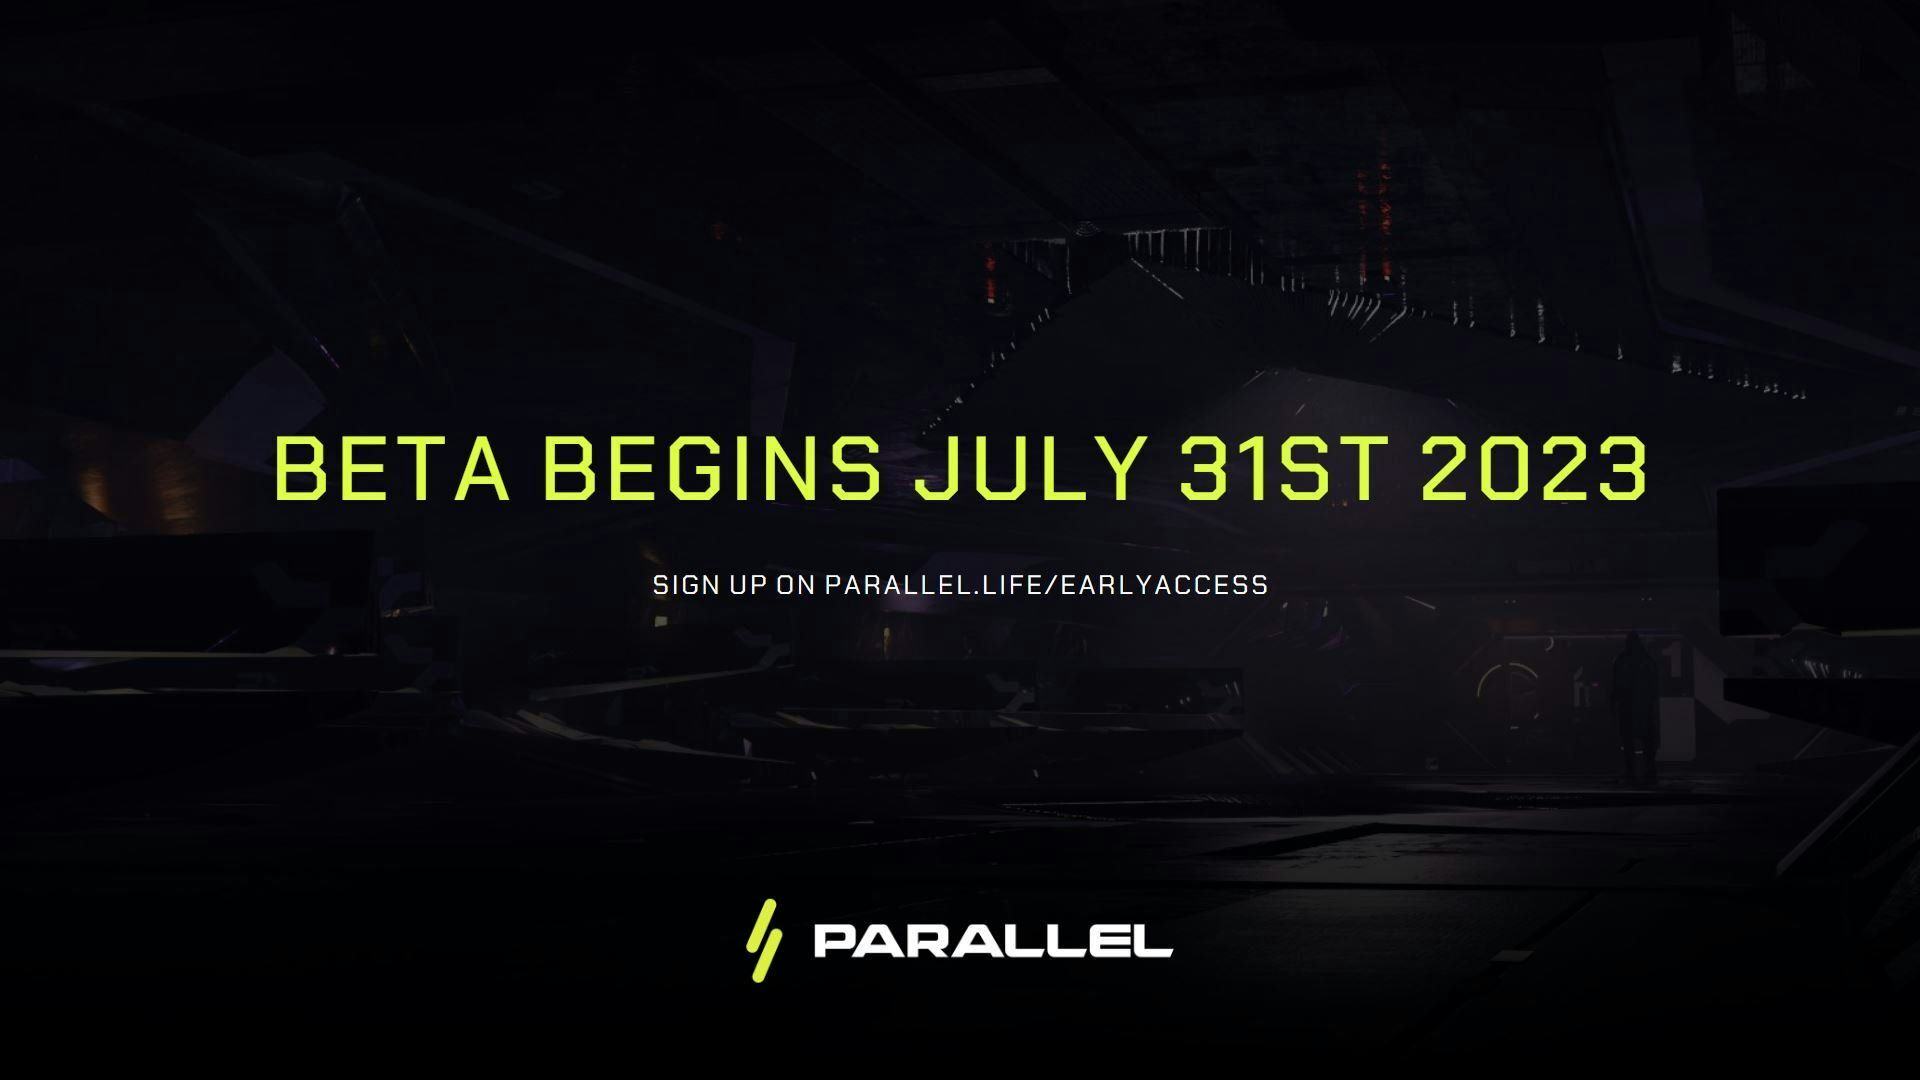 Parallel Beta Begins on July 31st 2023